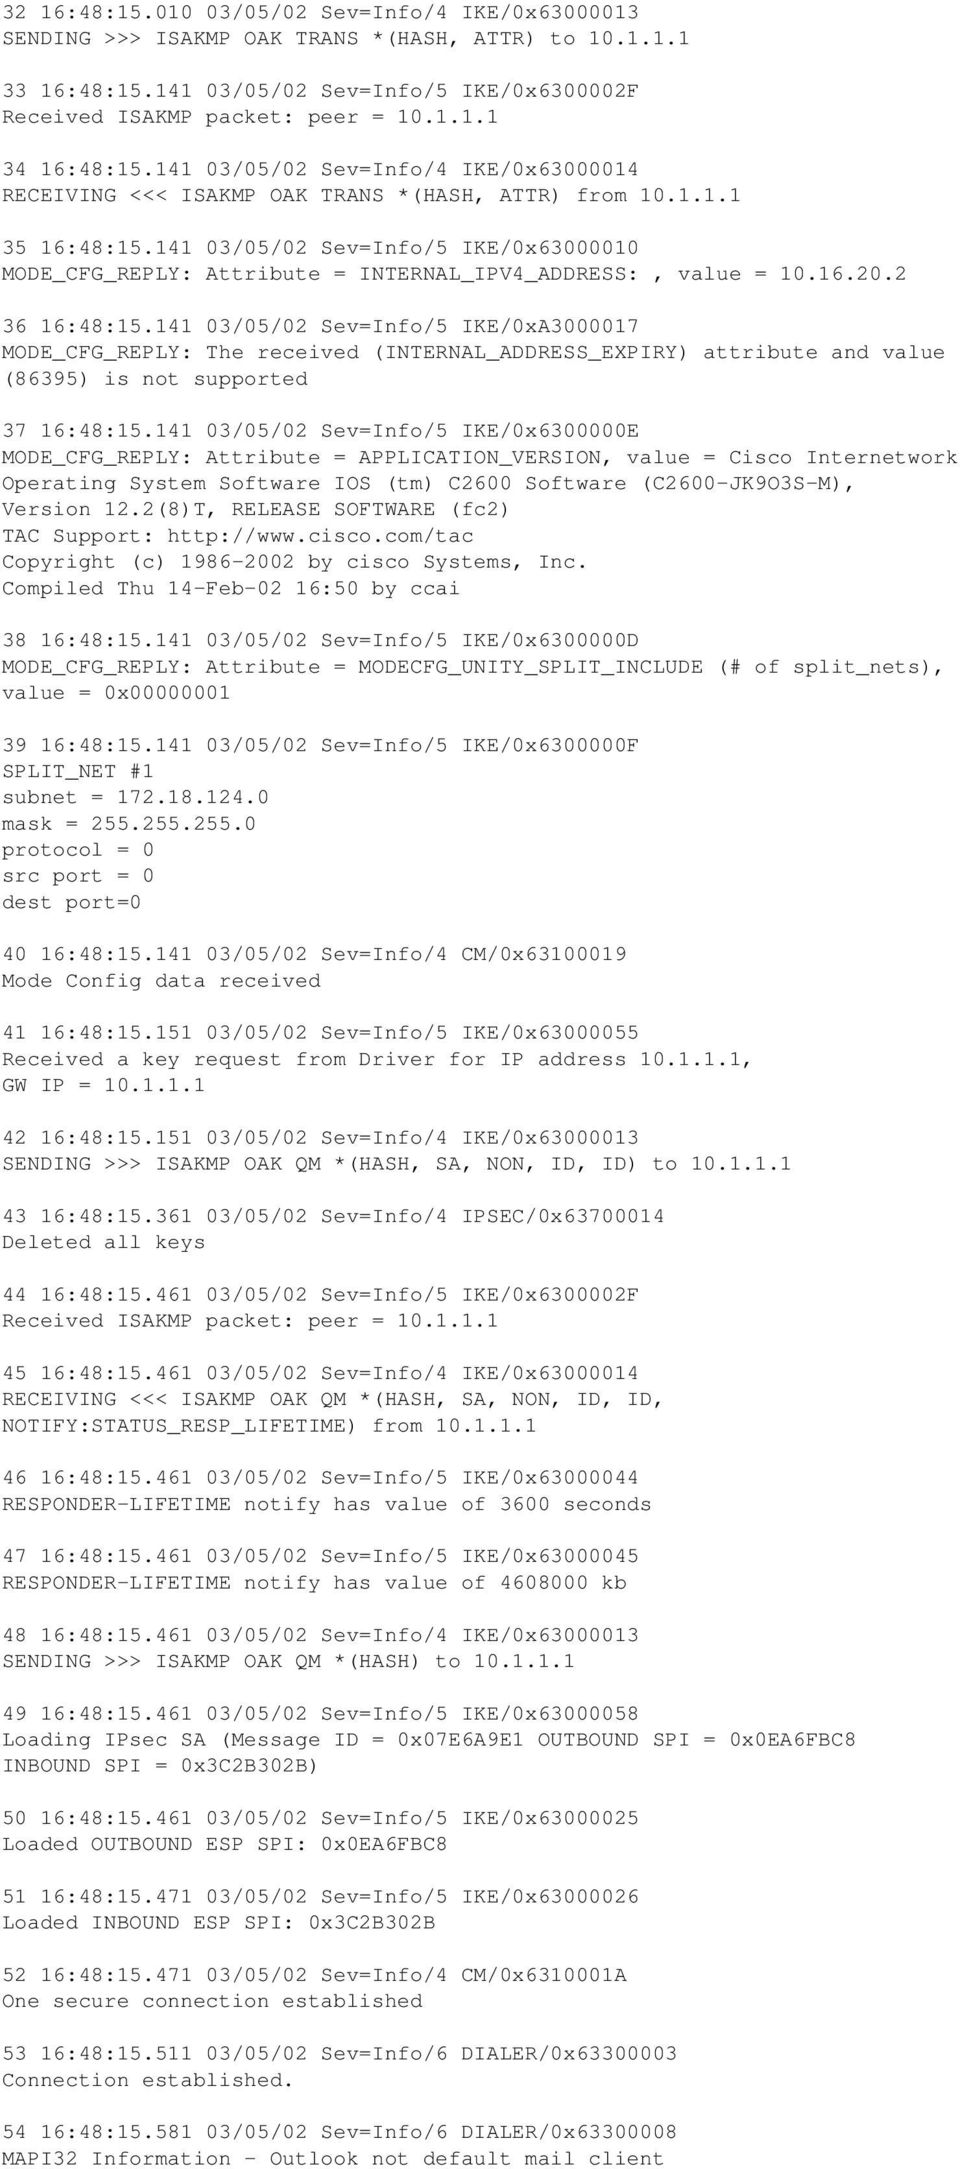 141 03/05/02 Sev=Info/5 IKE/0x63000010 MODE_CFG_REPLY: Attribute = INTERNAL_IPV4_ADDRESS:, value = 10.16.20.2 36 16:48:15.